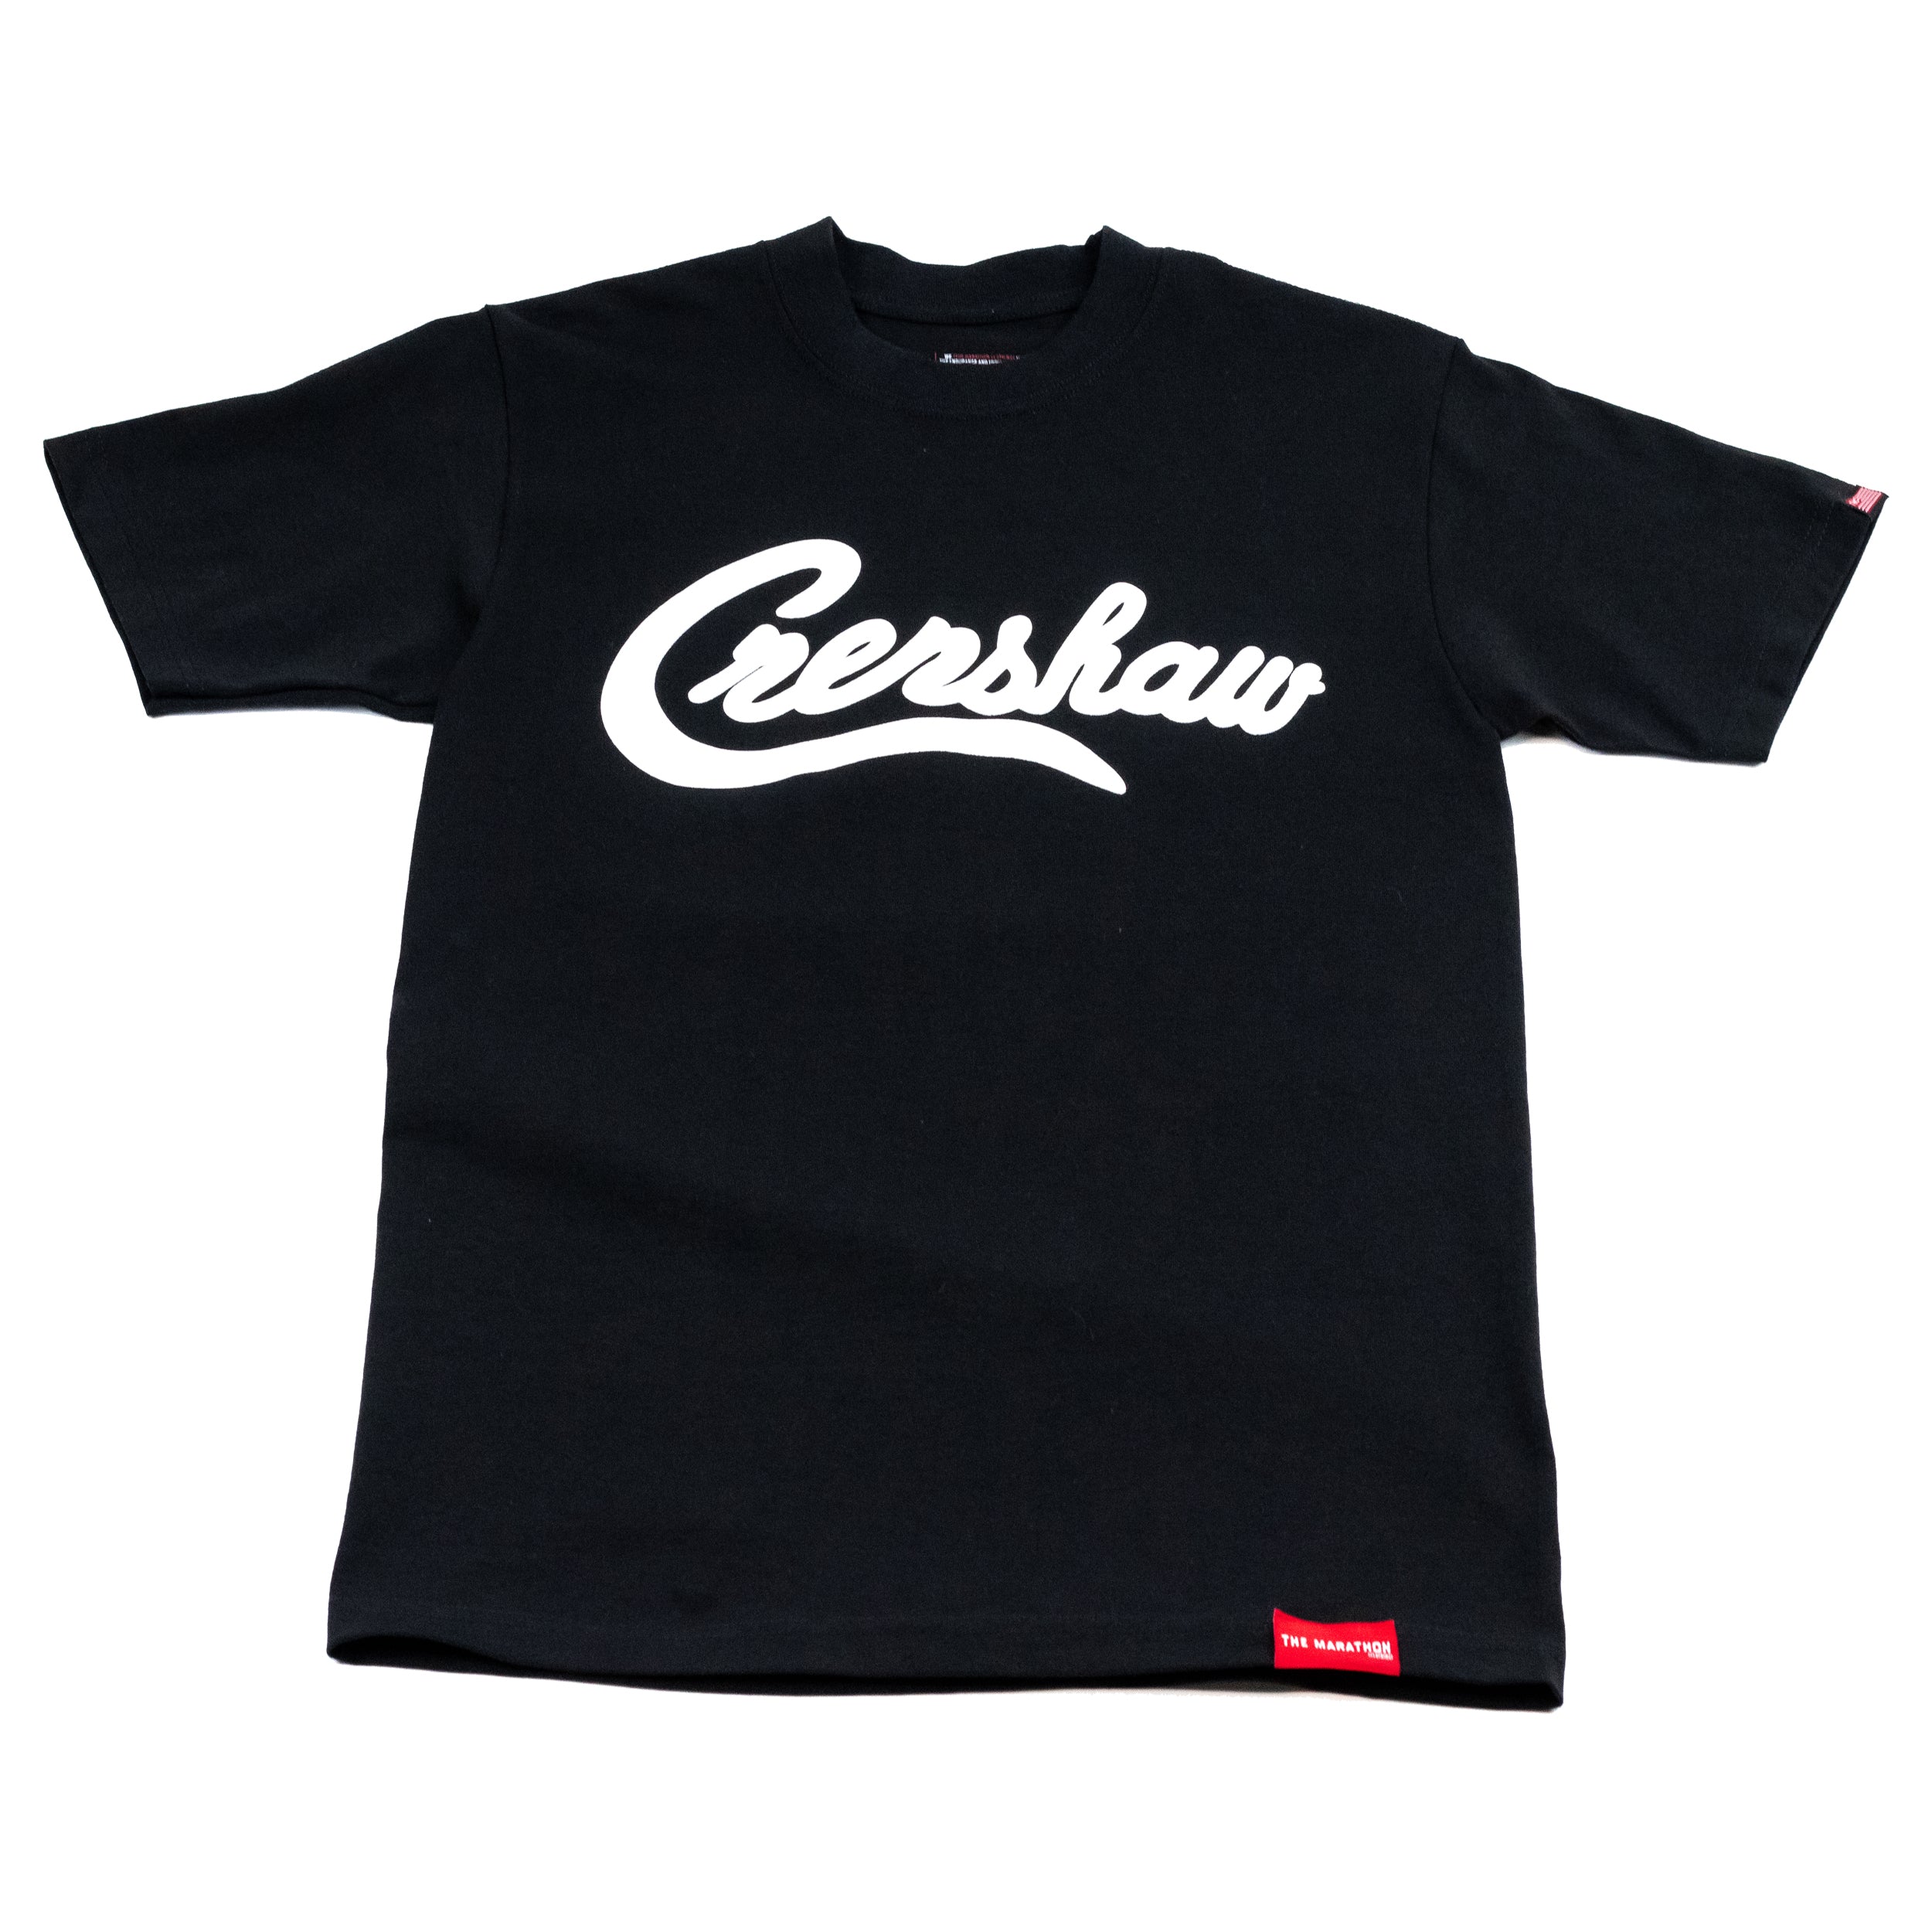 Crenshaw Hockey Jersey - Black/White – The Marathon Clothing